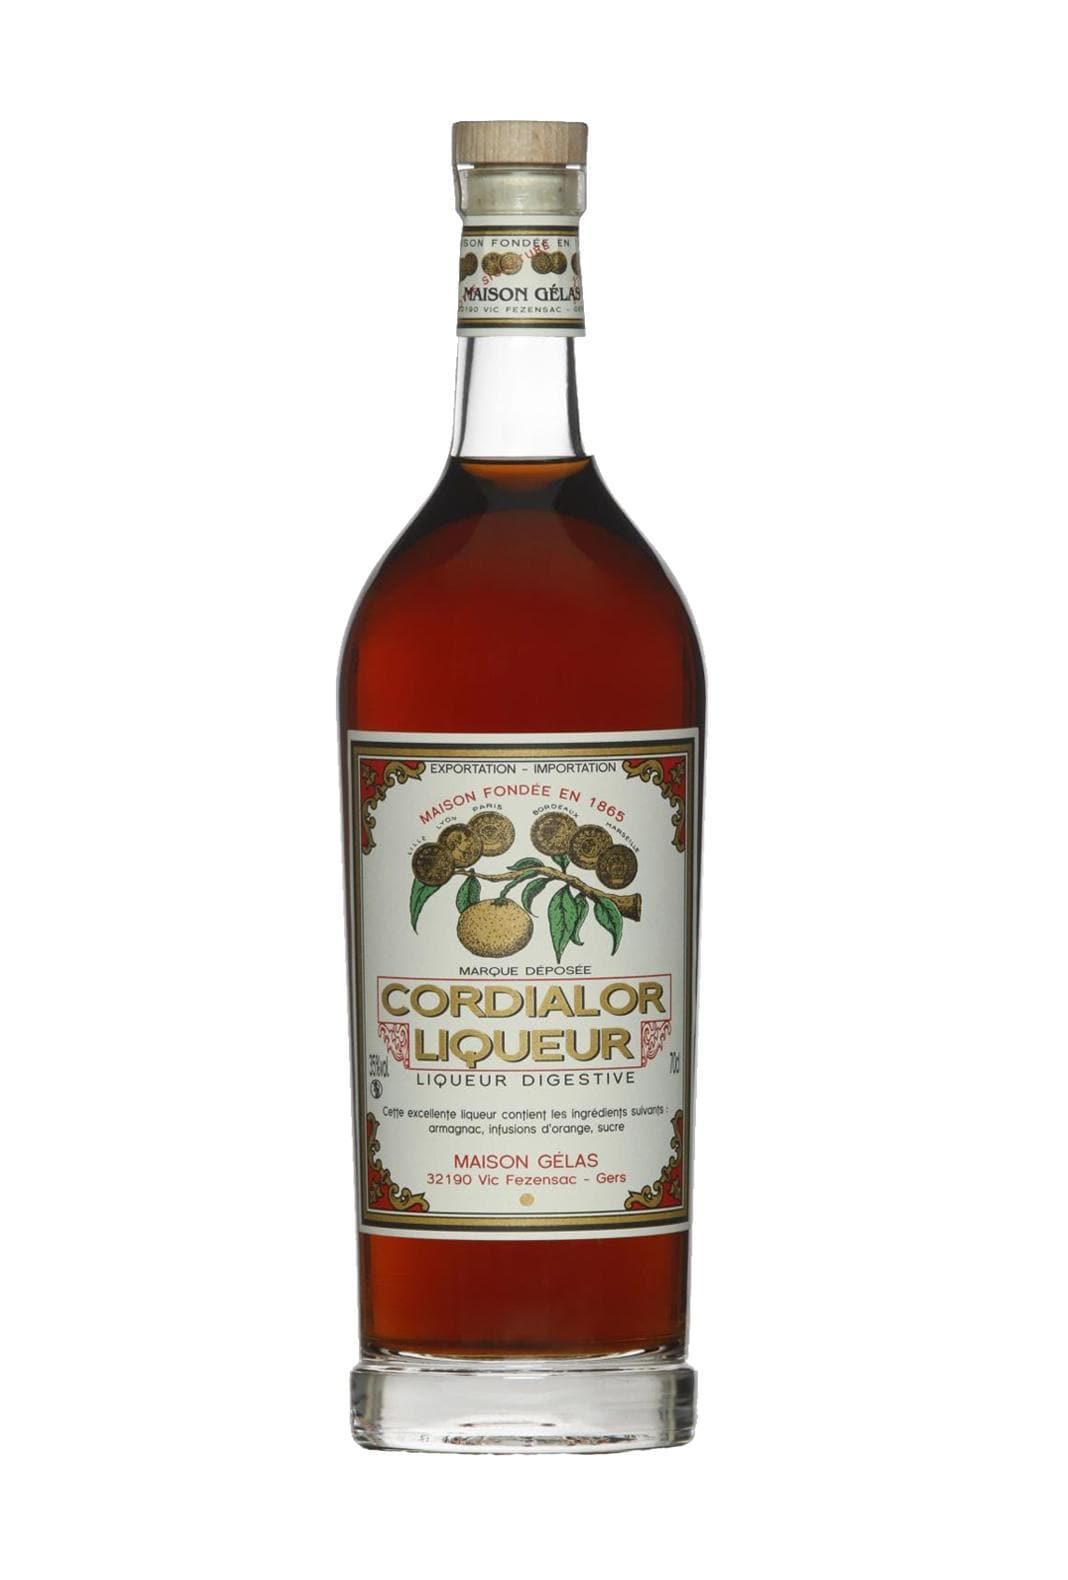 Gelas Cordialor Liqueur d'Orange et Armagnac (Green orange skins) 700ml 35% | Brandy | Shop online at Spirits of France